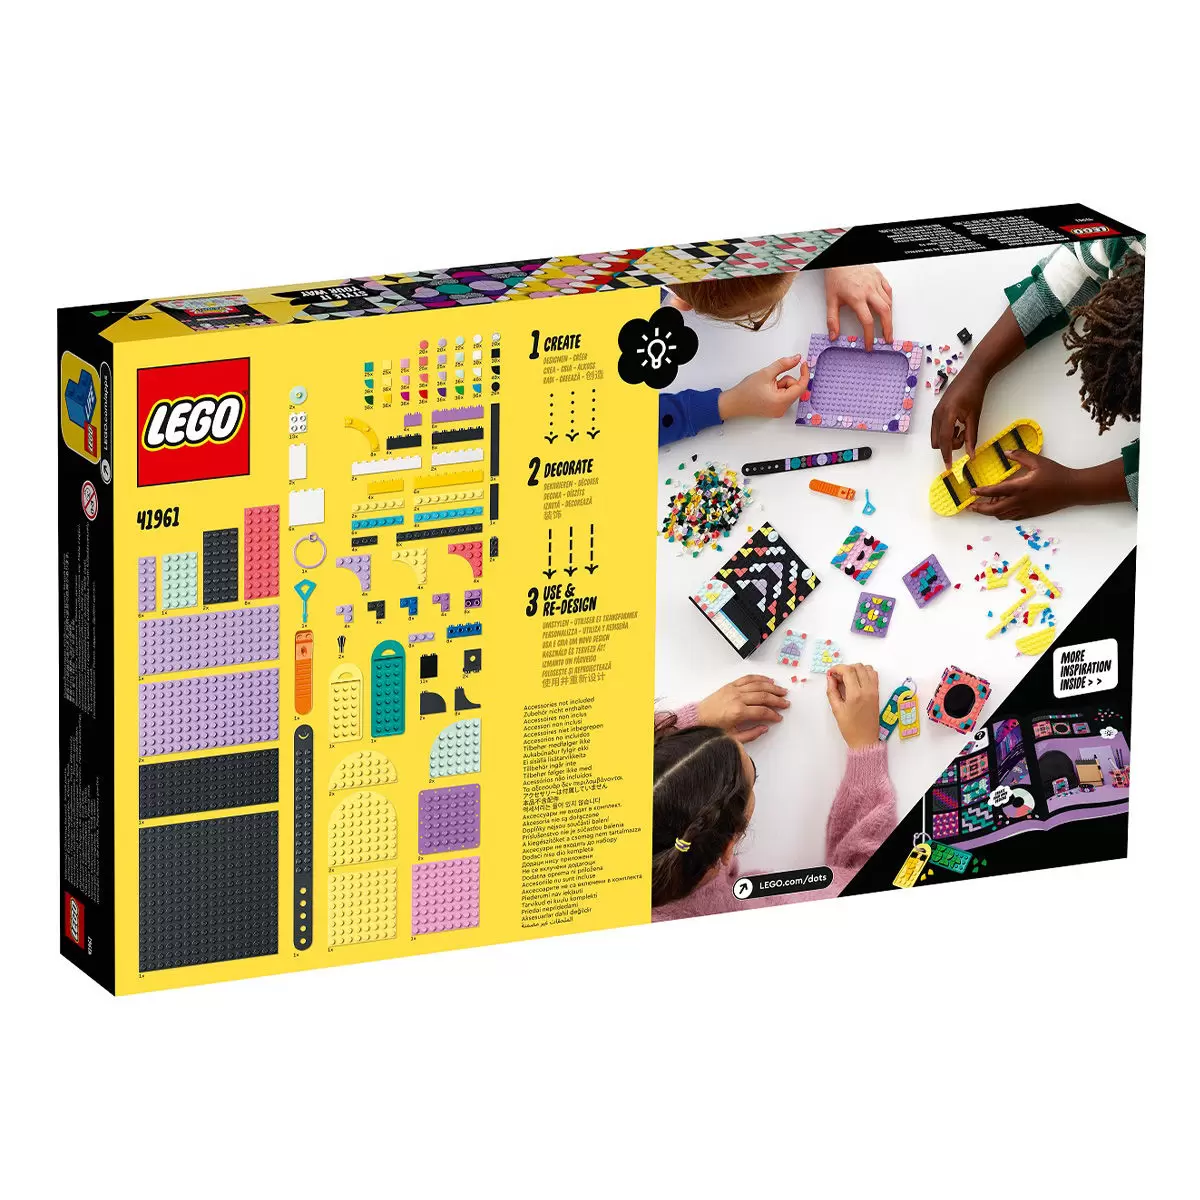 LEGO 豆豆樂系列 設計師工具組 圖案 41961